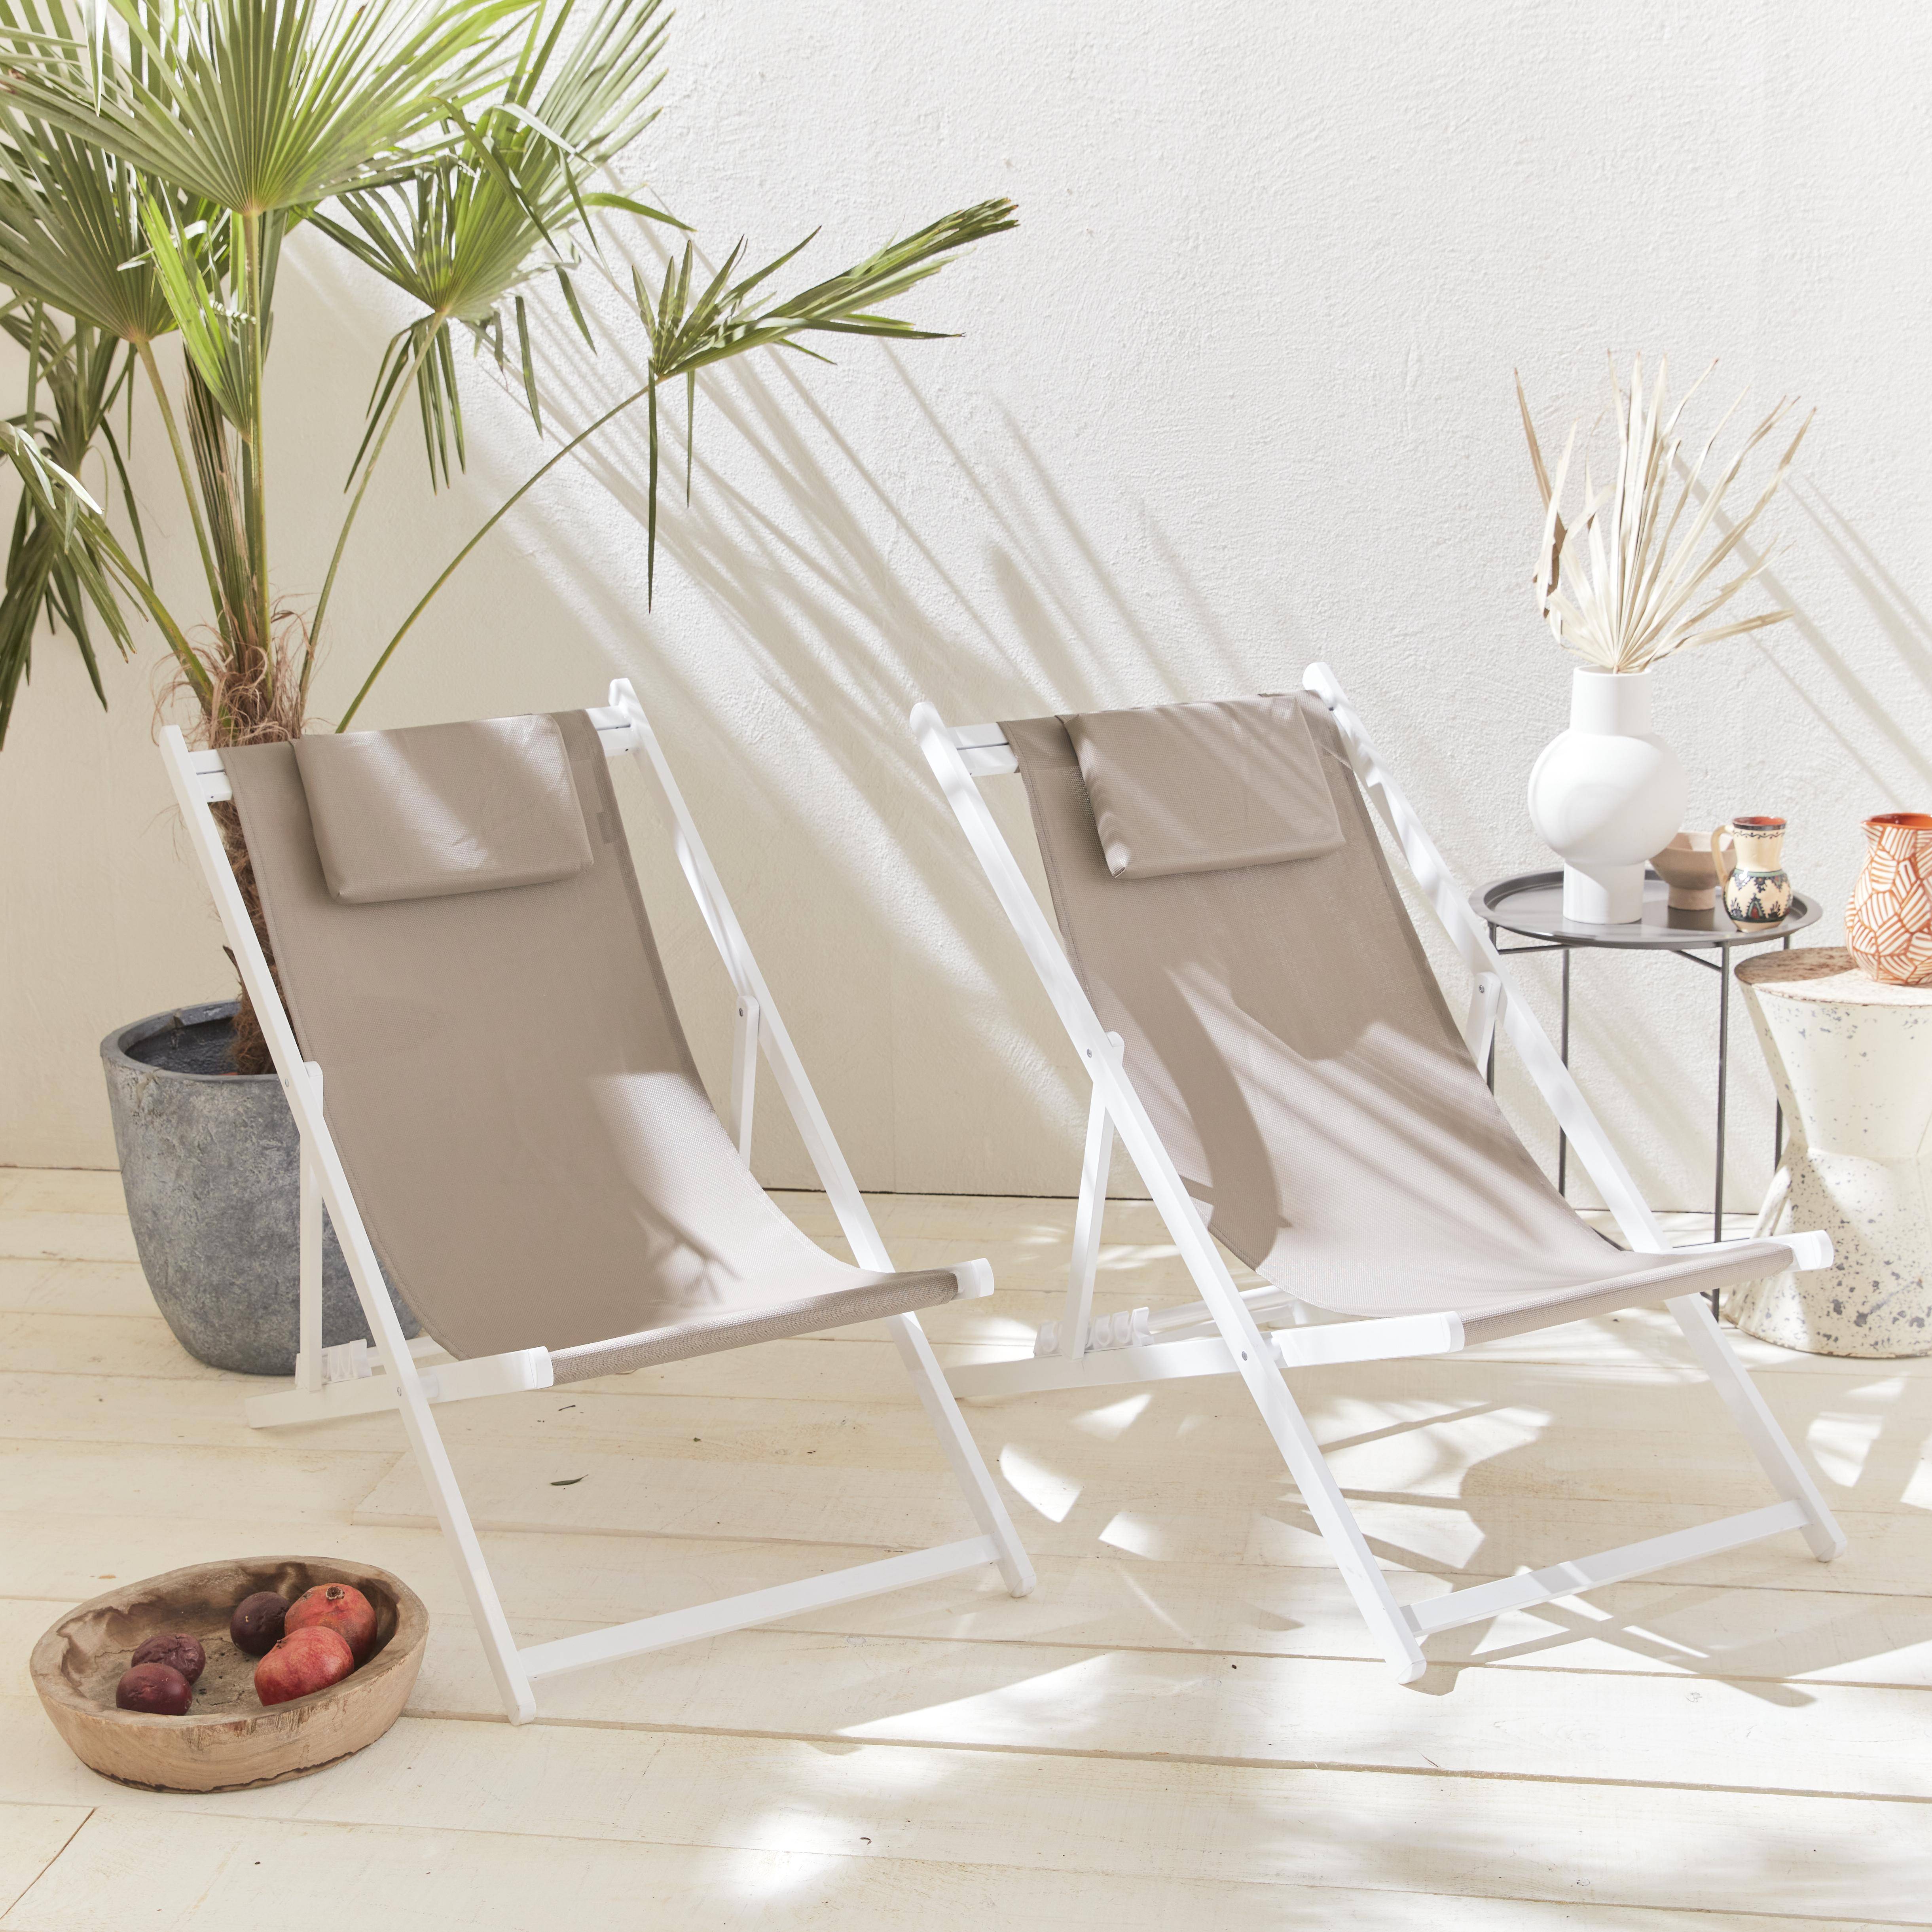 Juego de 2 sillas para tomar sol - Gaia taupe - Aluminio blanco y textileno taupe con reposacabezas.,sweeek,Photo1